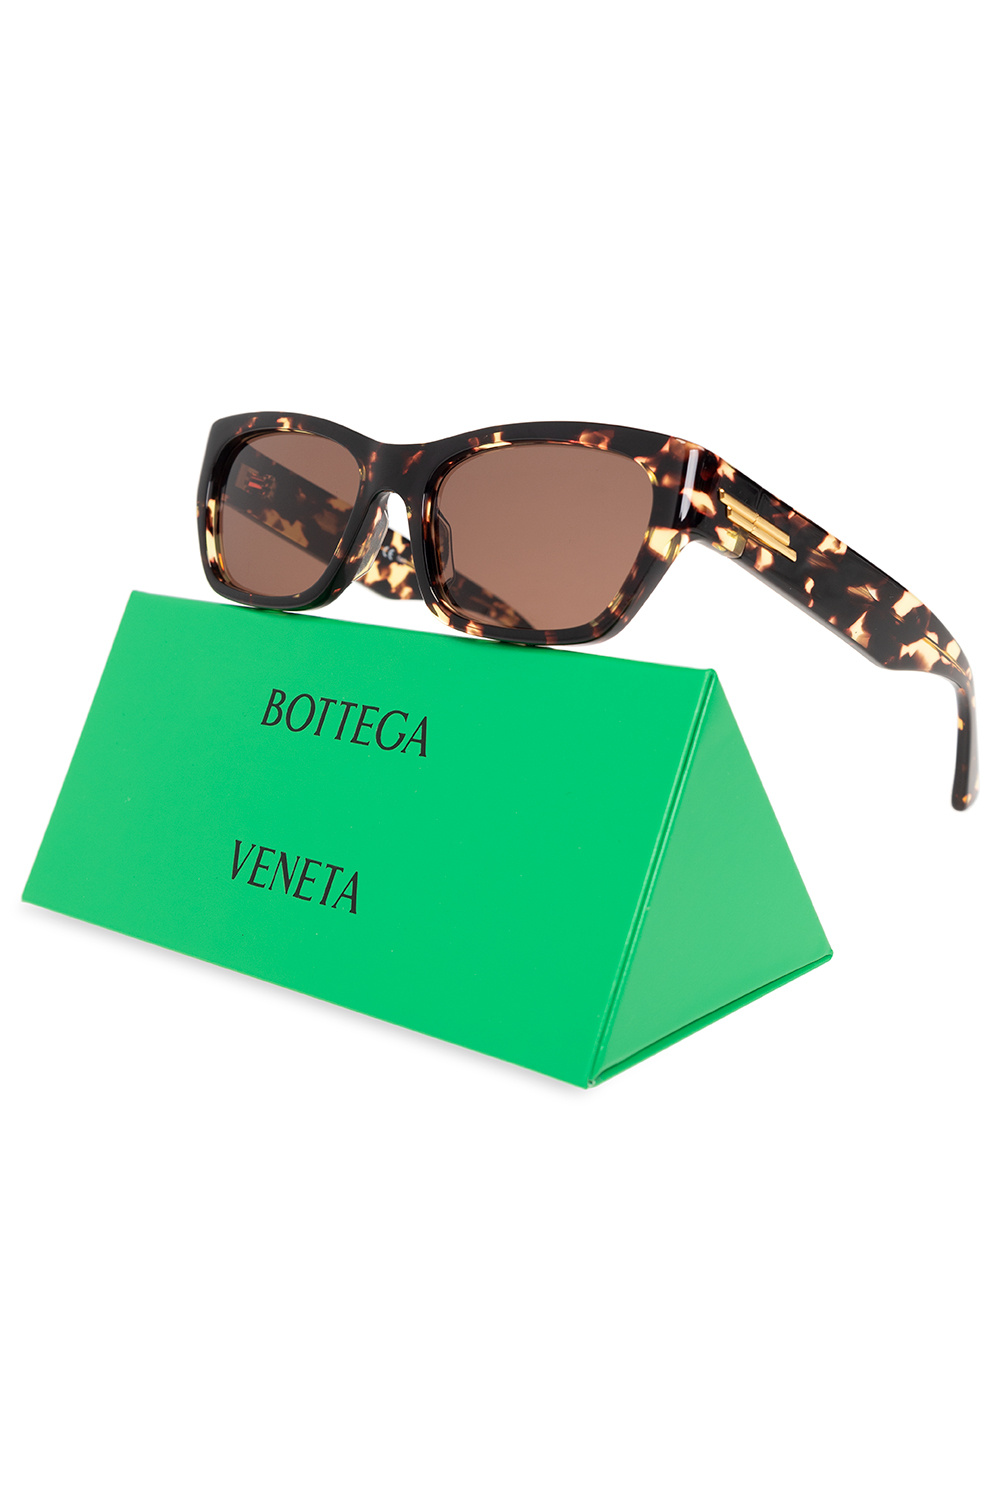 Bottega Veneta off designer brand Dior sunglasses